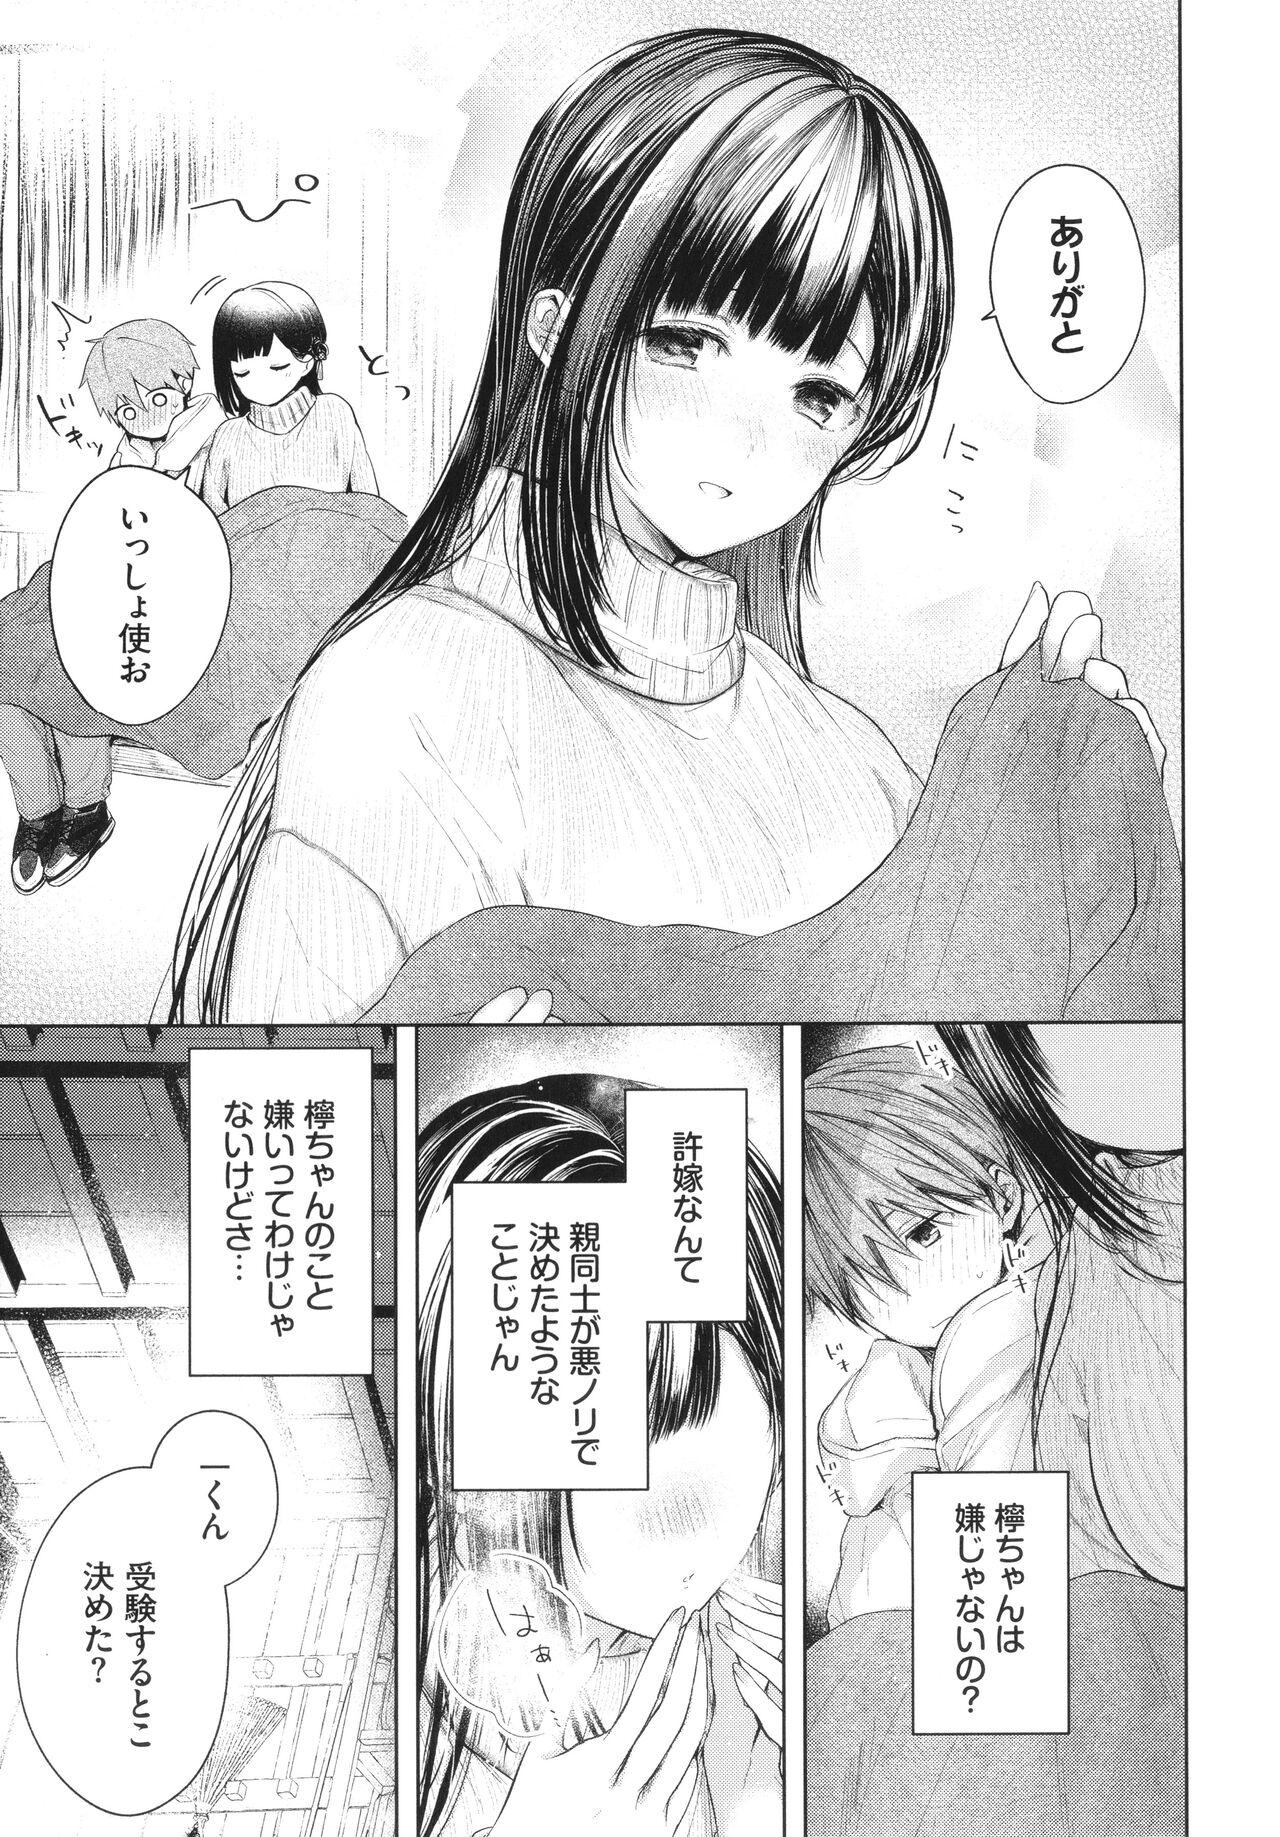 Shaking Ii mo Amai mo Kimi to Dake. - You're the only one I love. Mediumtits - Page 8